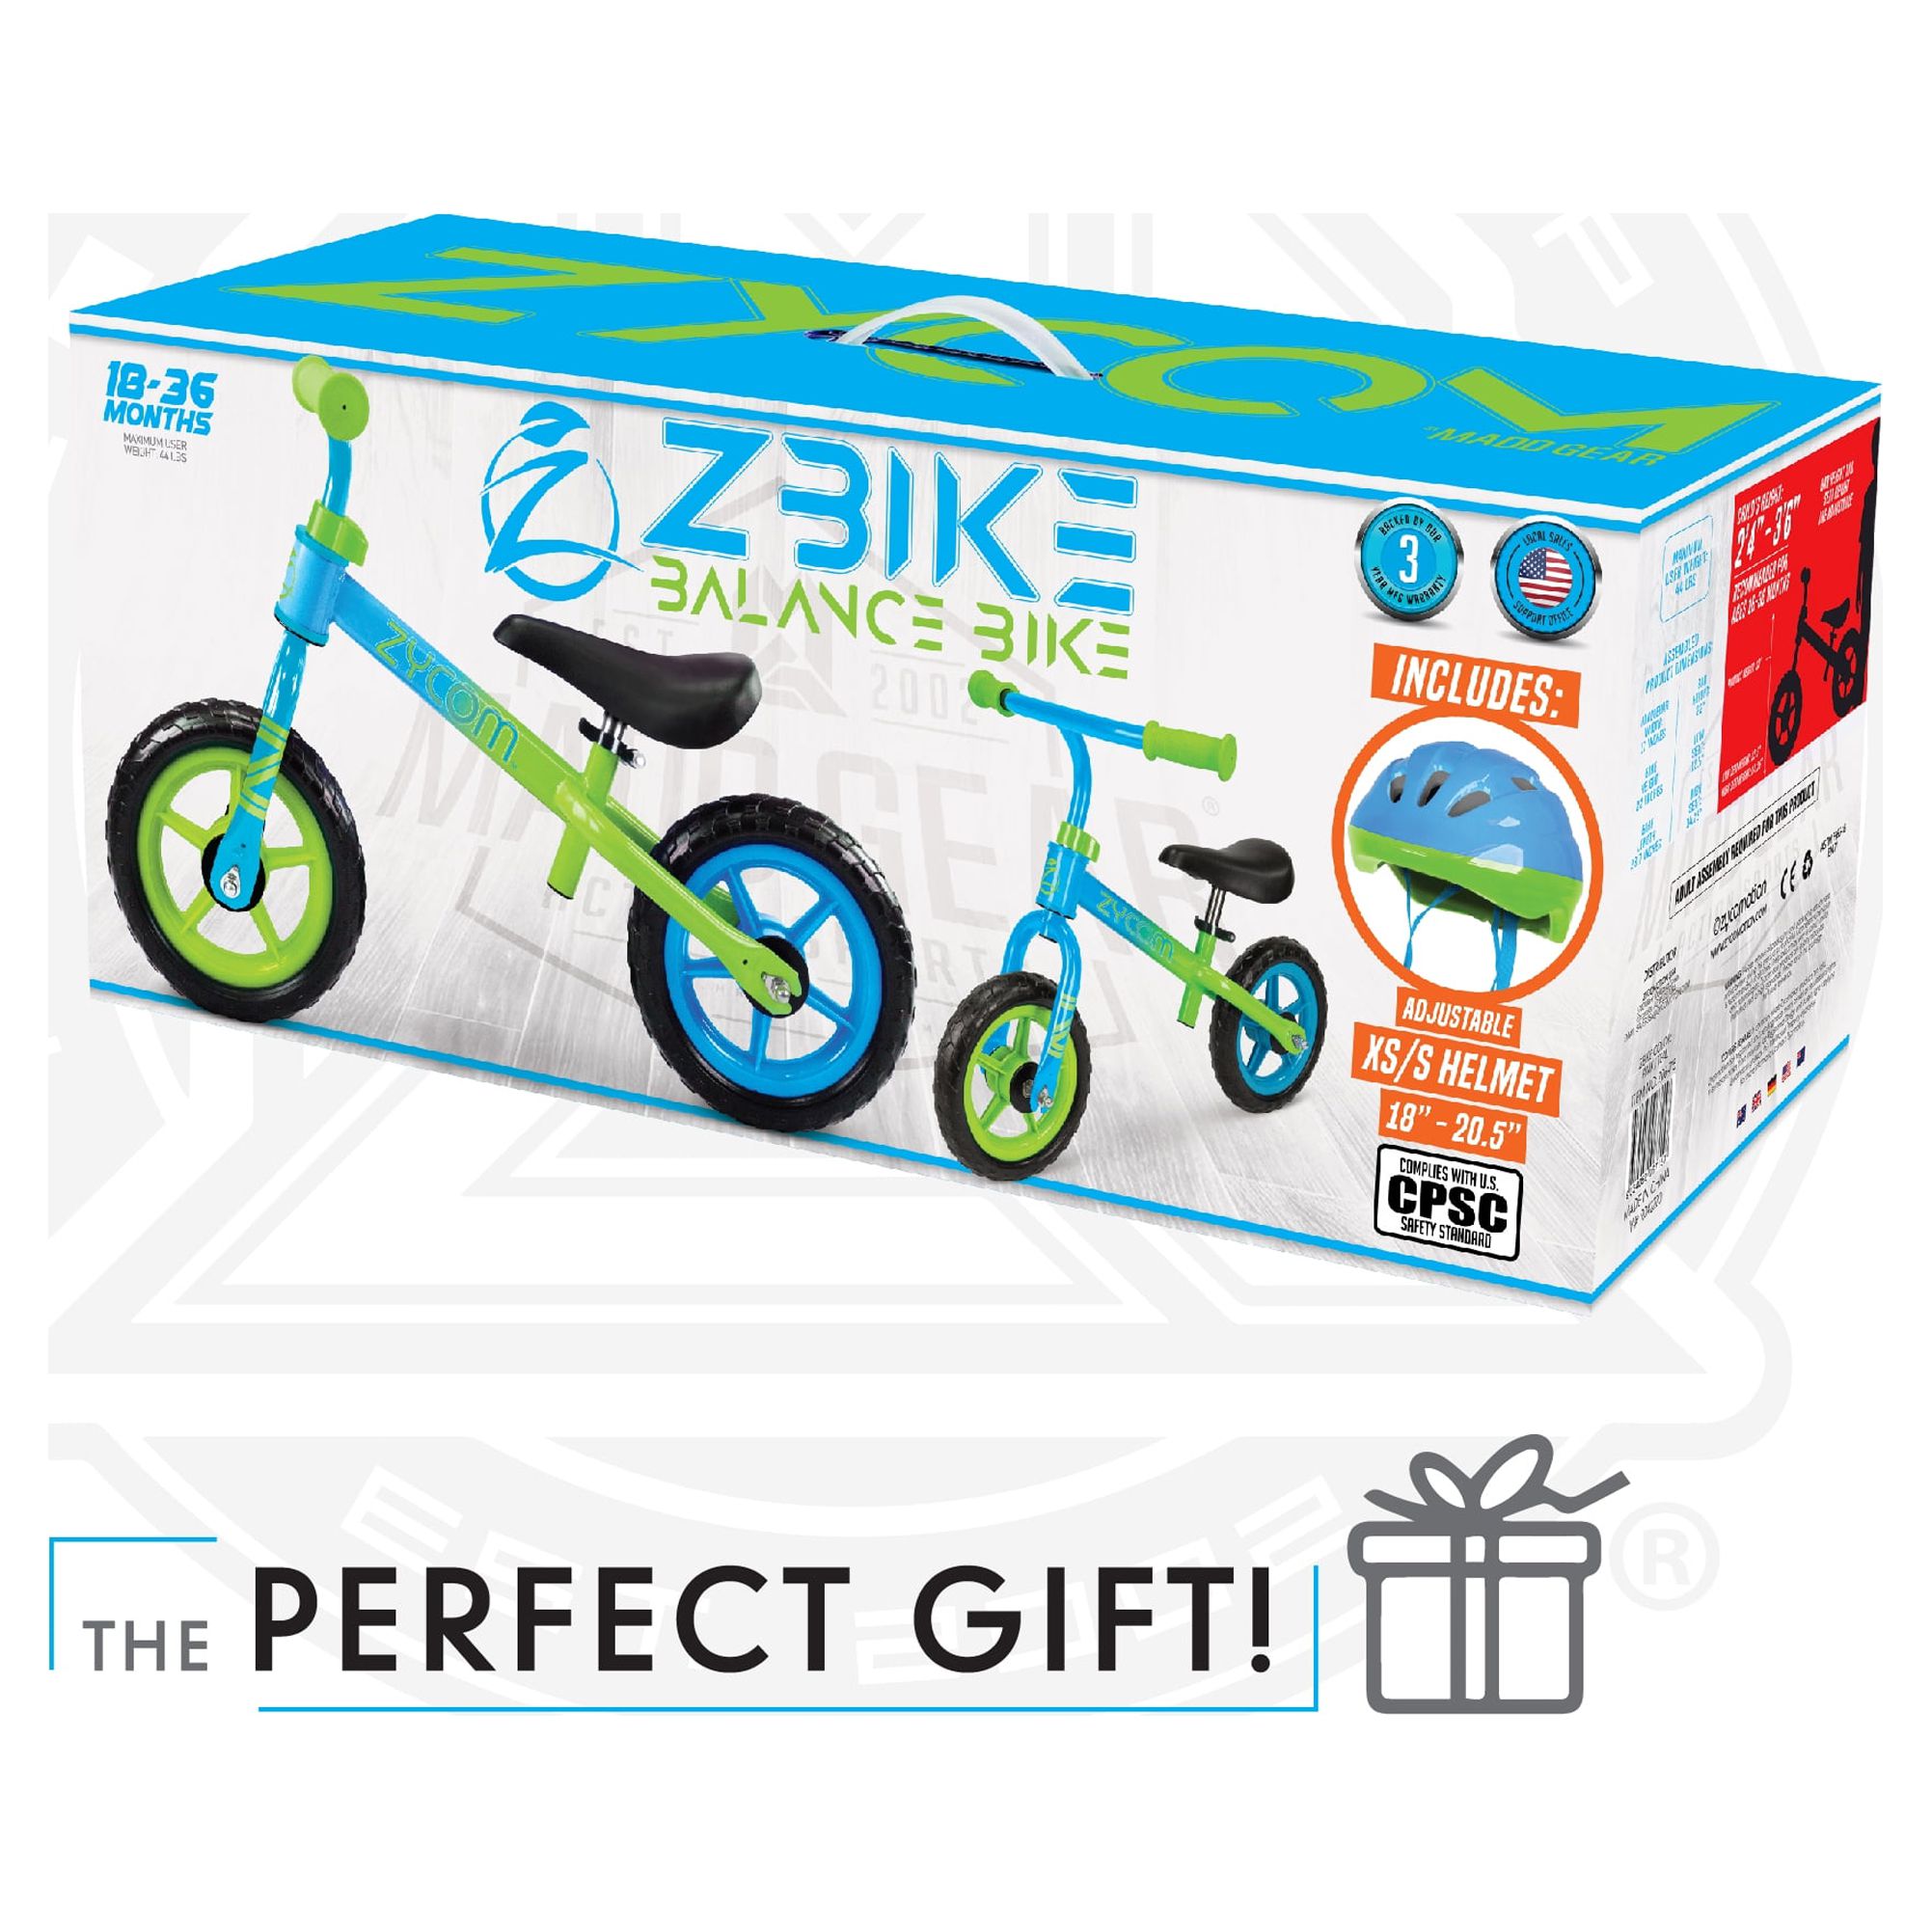 Zycom 10-inch Toddlers Balance Bike Adjustable Helmet Airless Wheels Lightweight Training Bike Blue - image 8 of 12